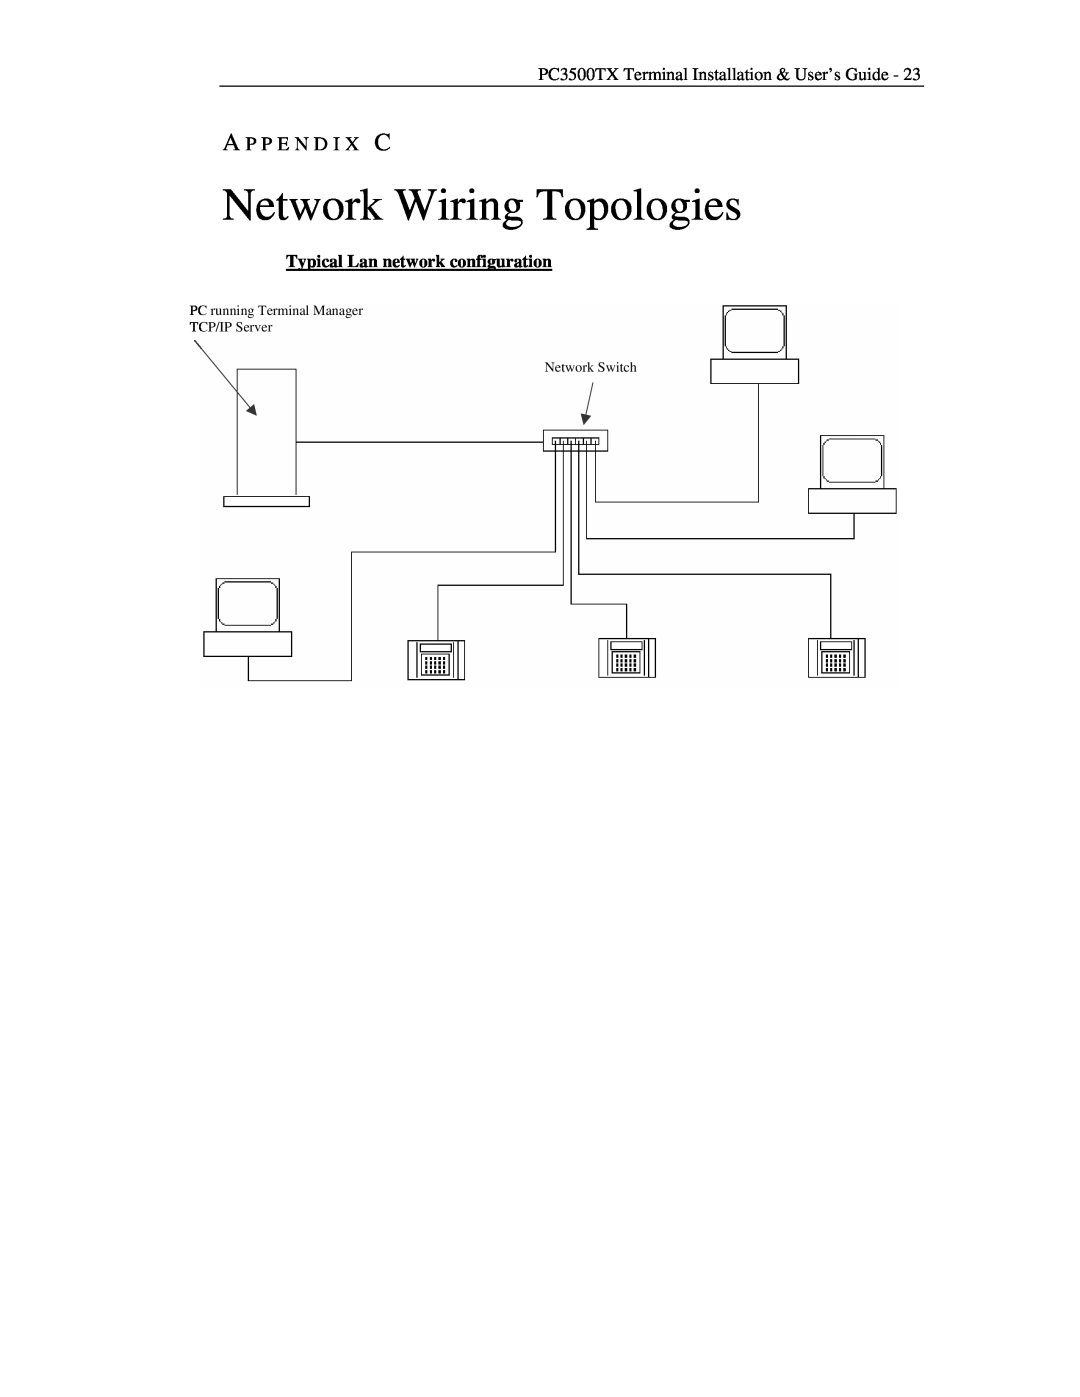 Lathem PC3500TX manual Network Wiring Topologies, A P P E N D I X C, Typical Lan network configuration 